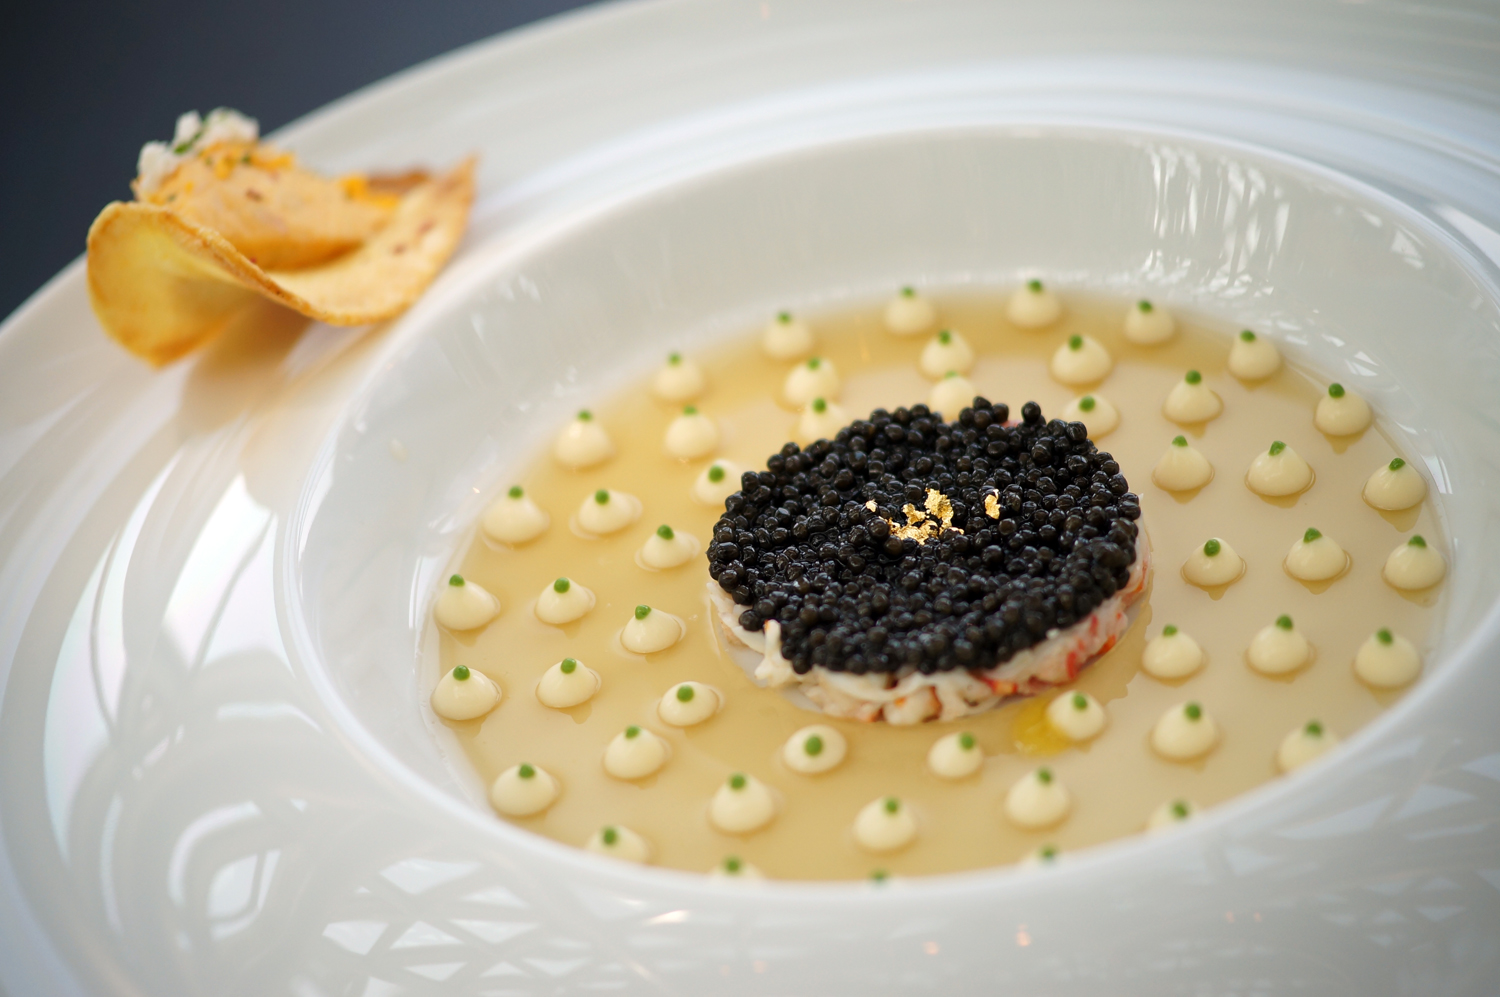 Le Caviar